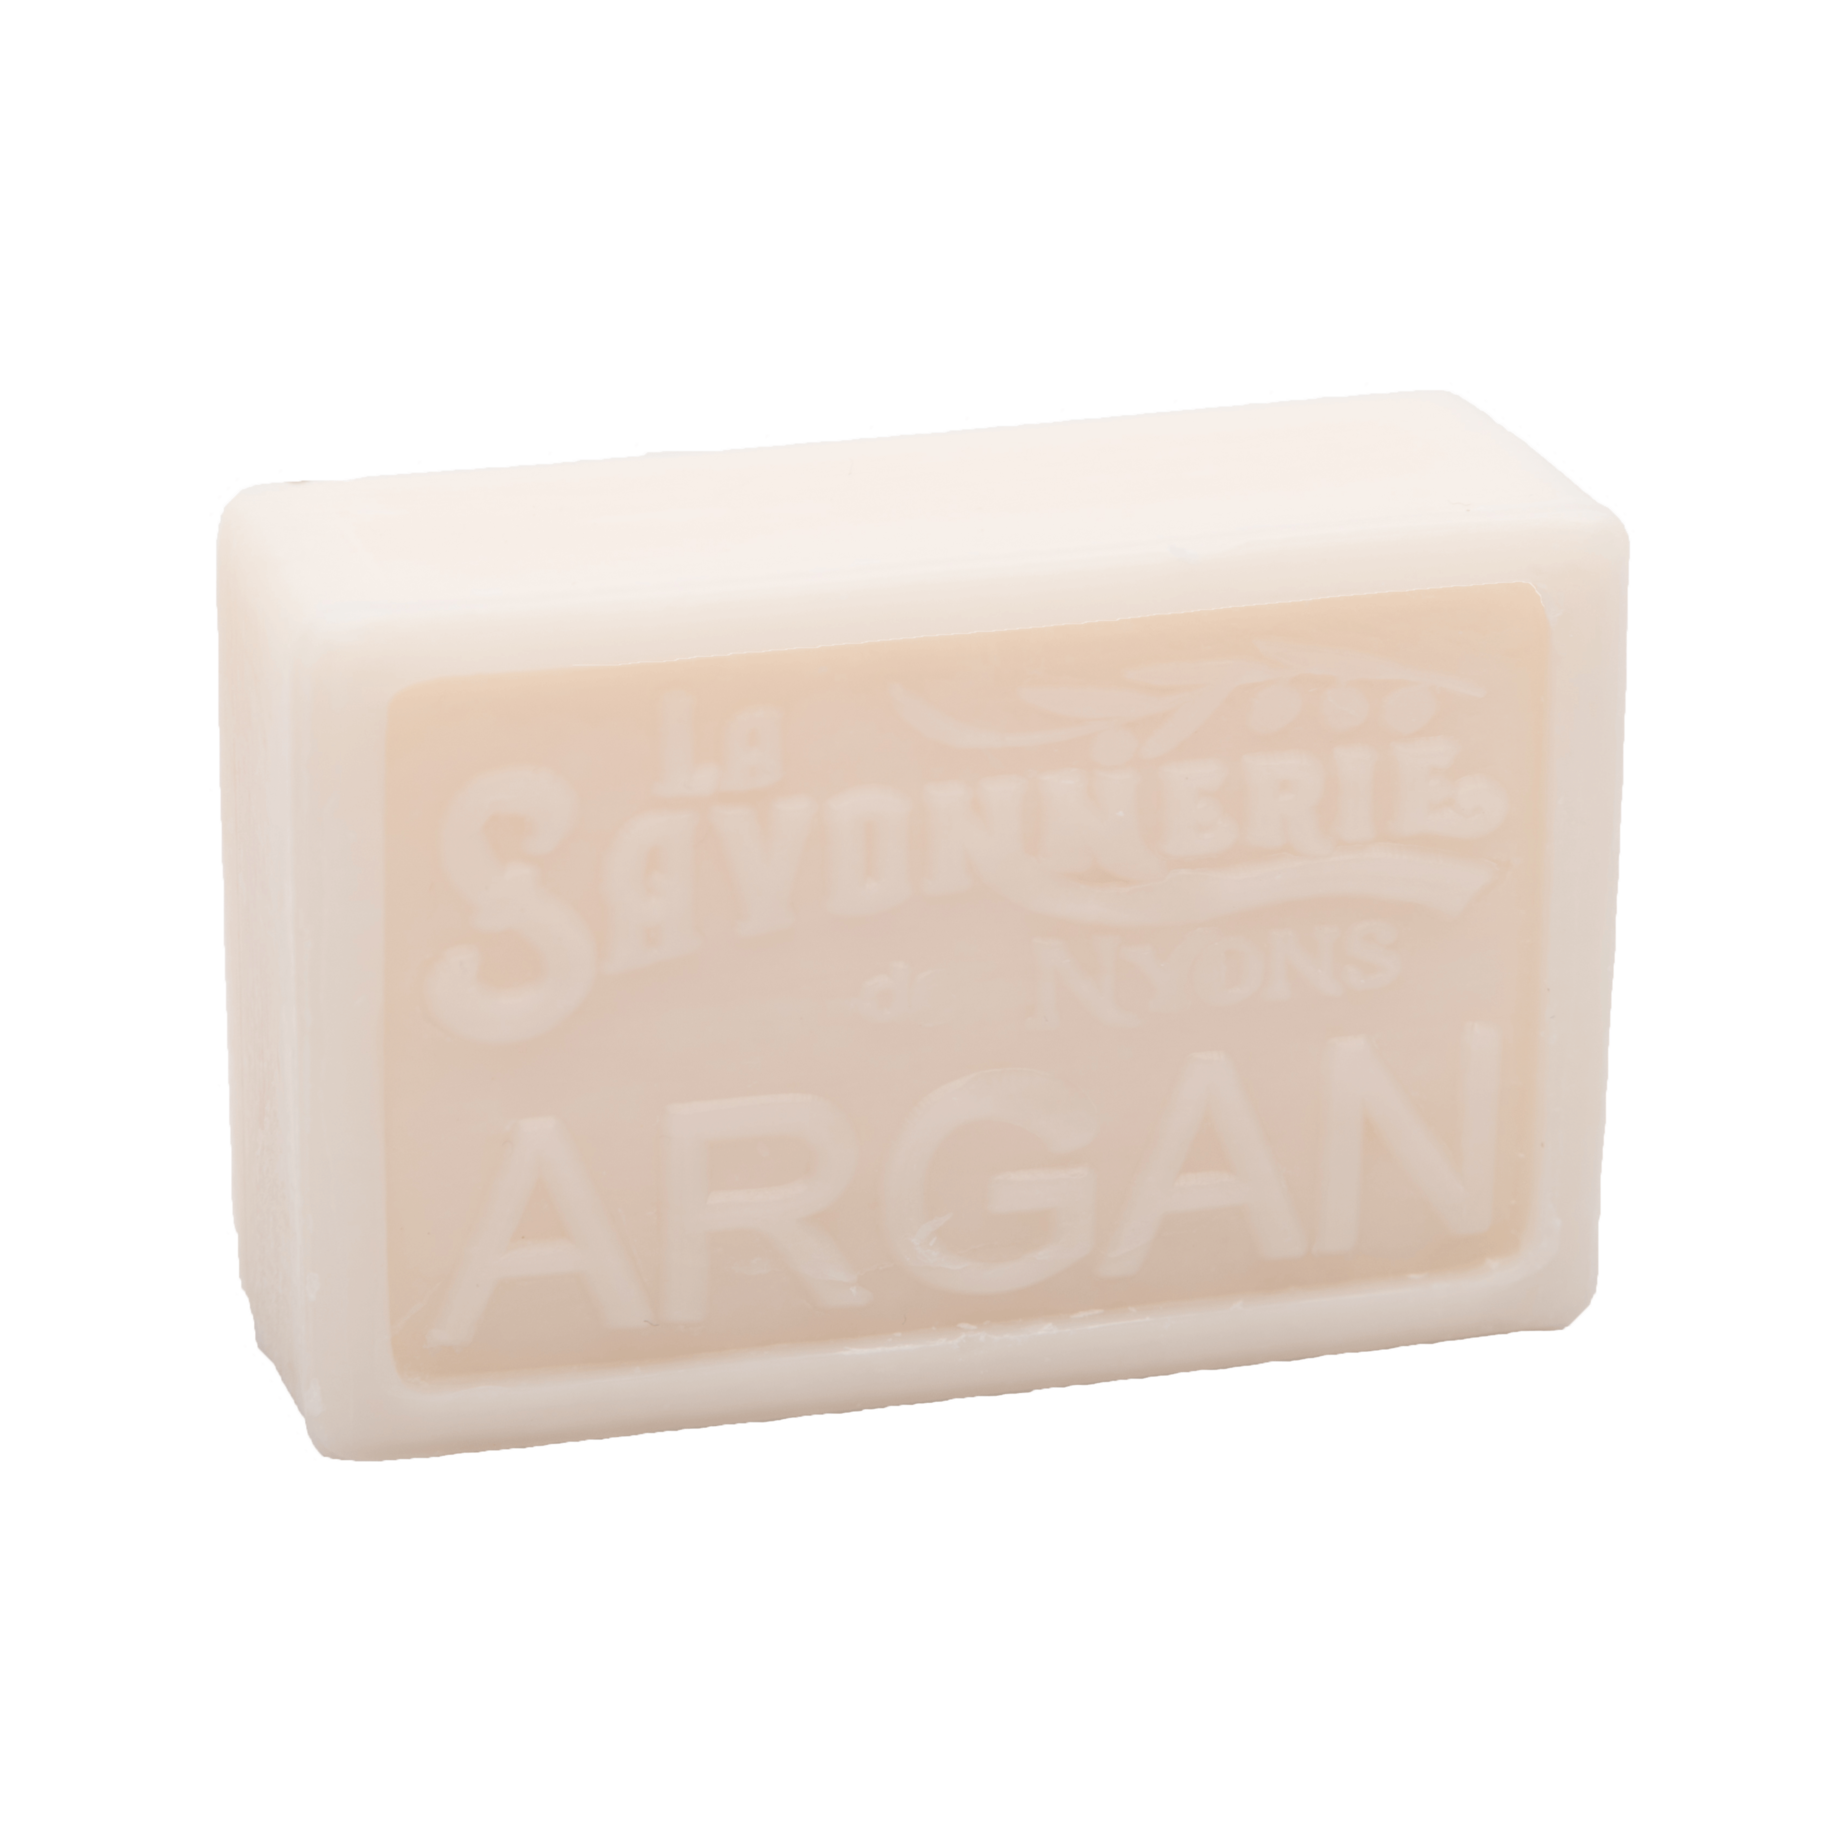 White bar of soap that reads La Savonnerie de Nyons Argan.